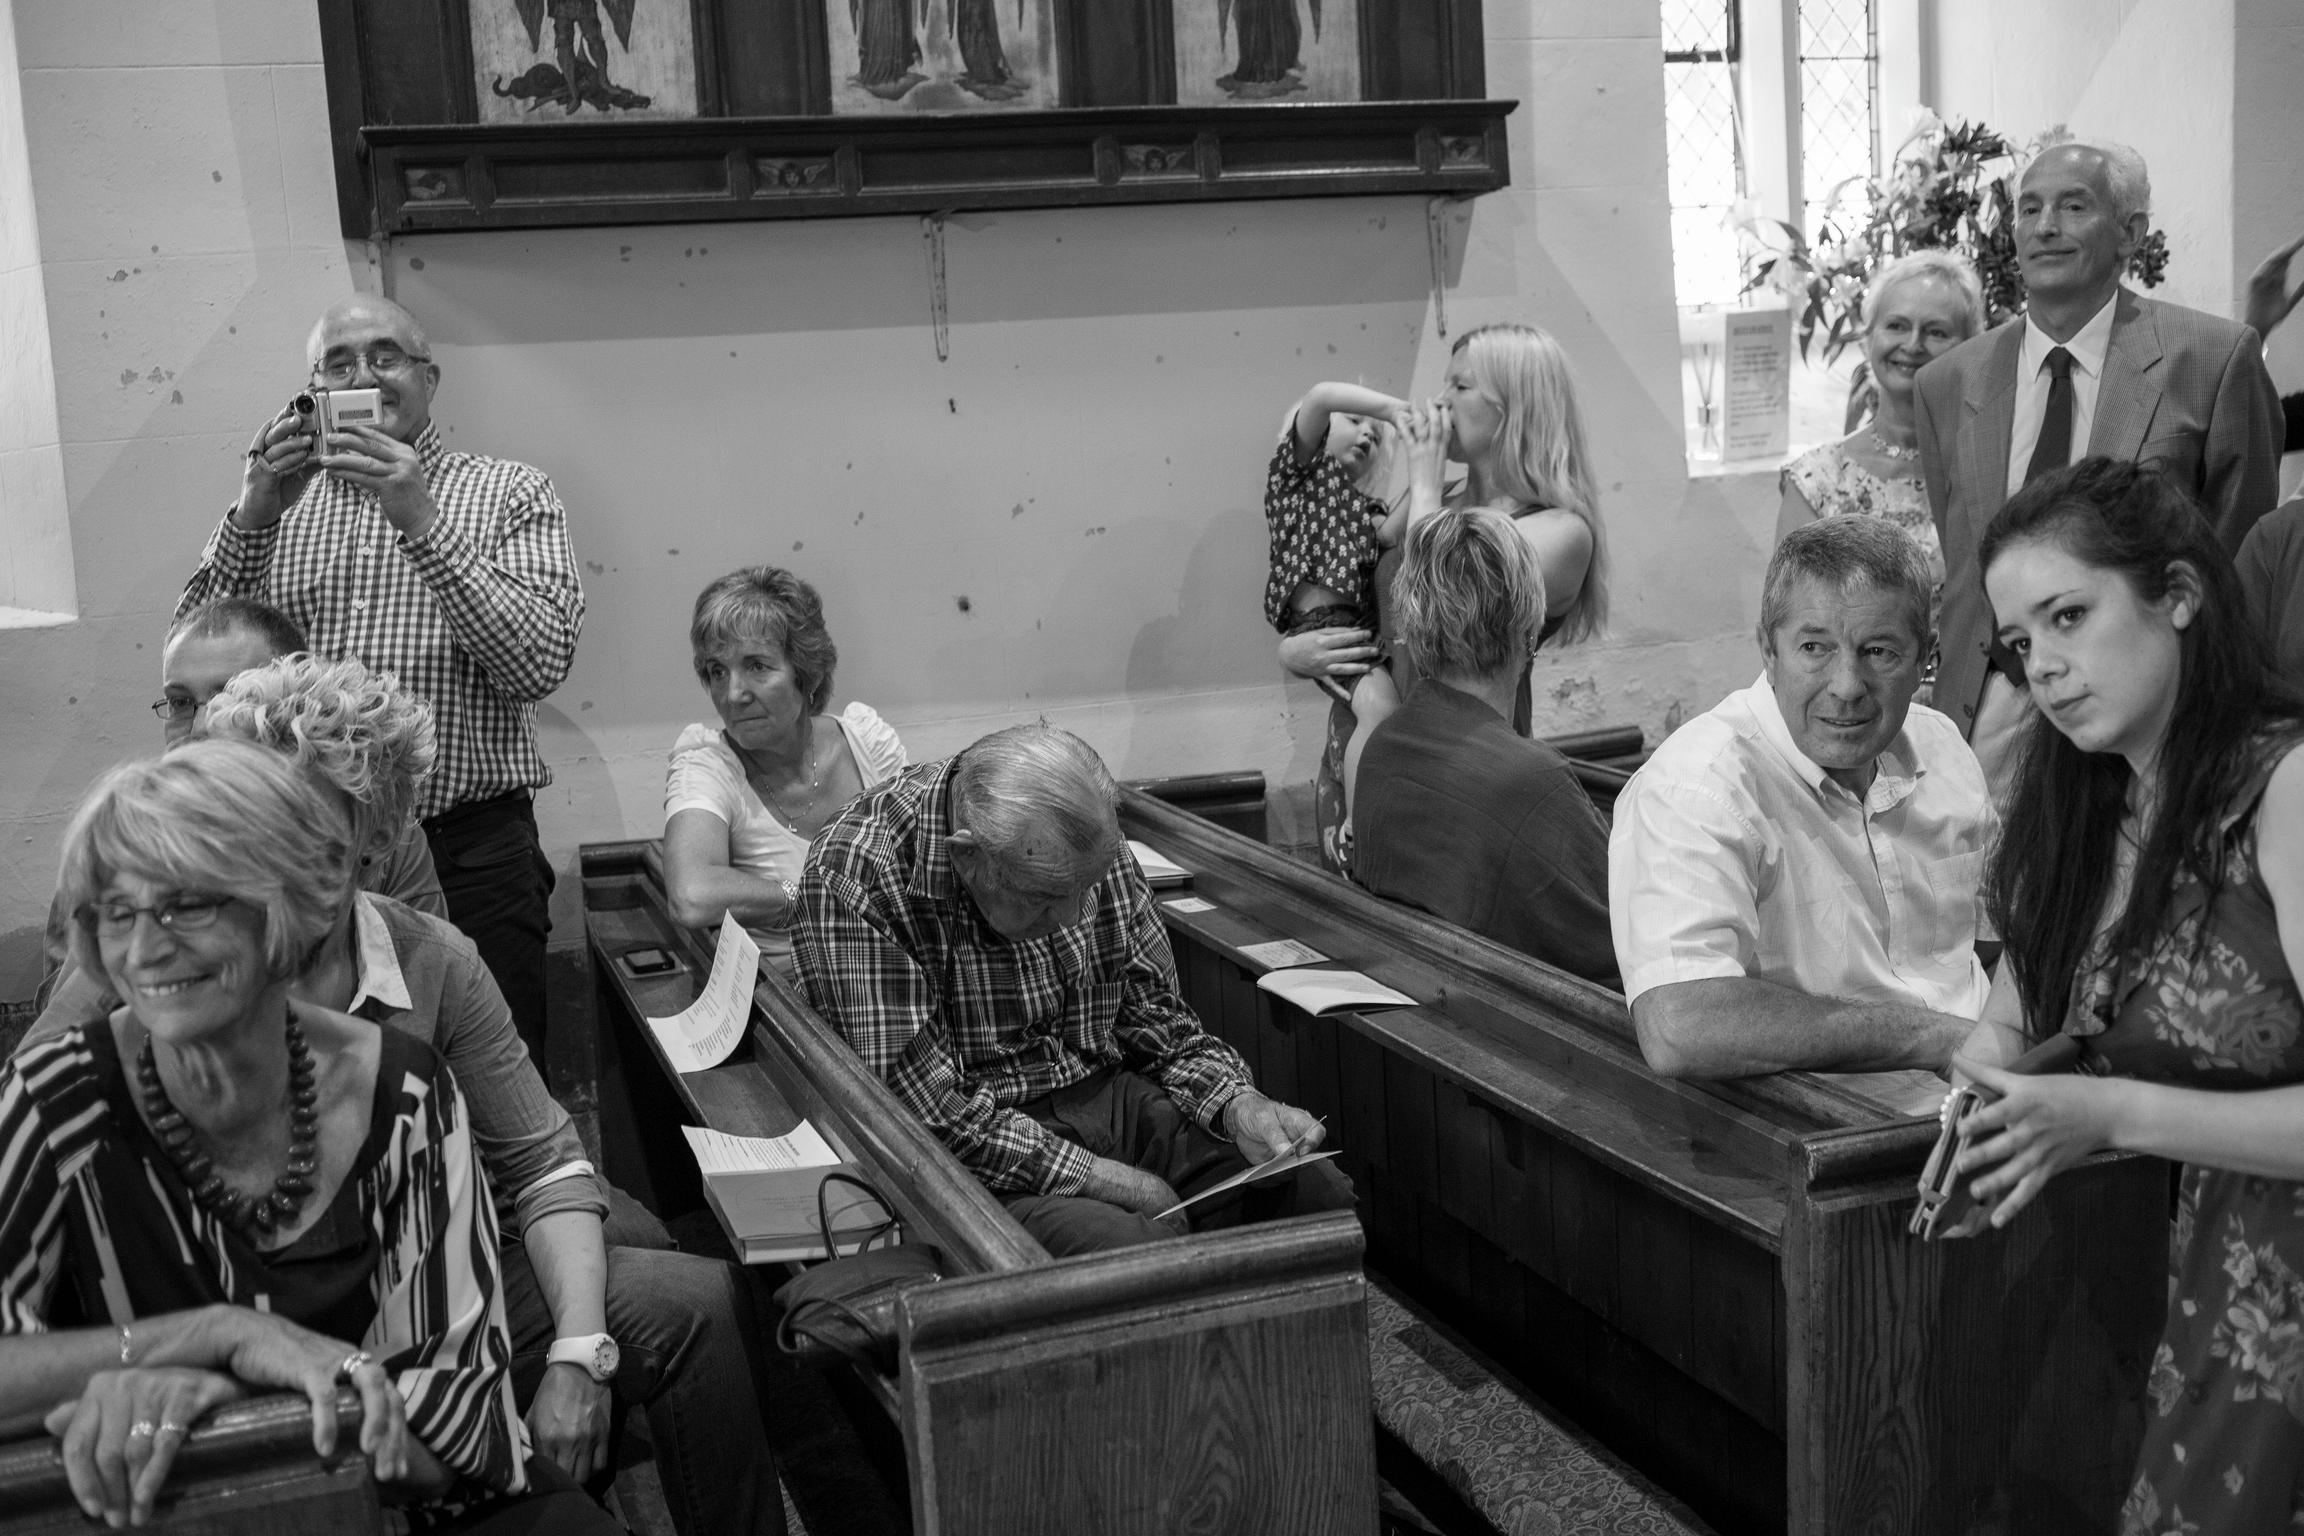 Christening at St Michael's Church. Tintern, Wales